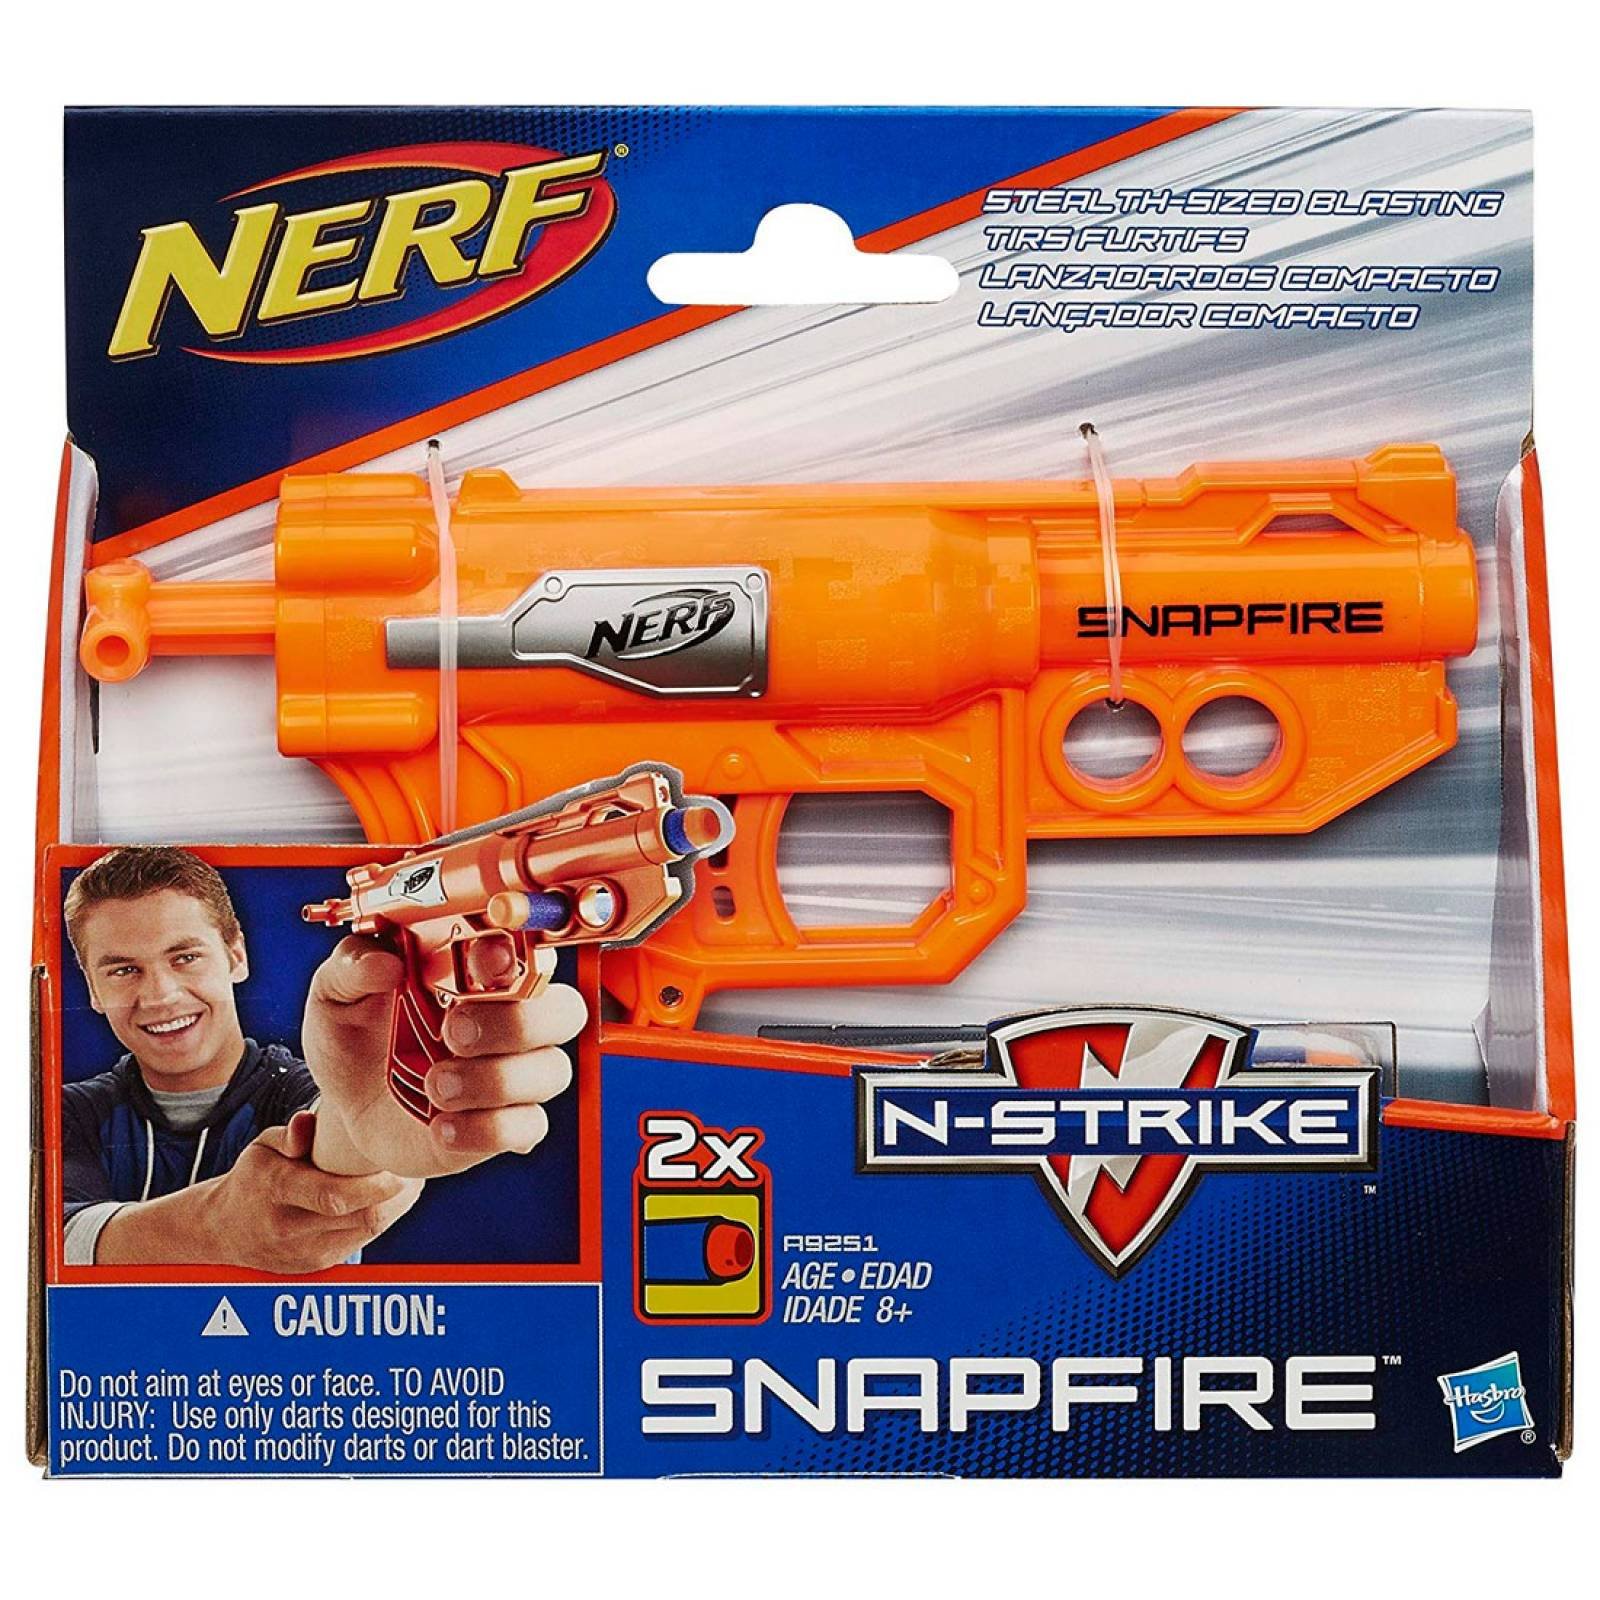 Nerf N-Strike SnapFire Blaster Splinter Compacto Hasbro